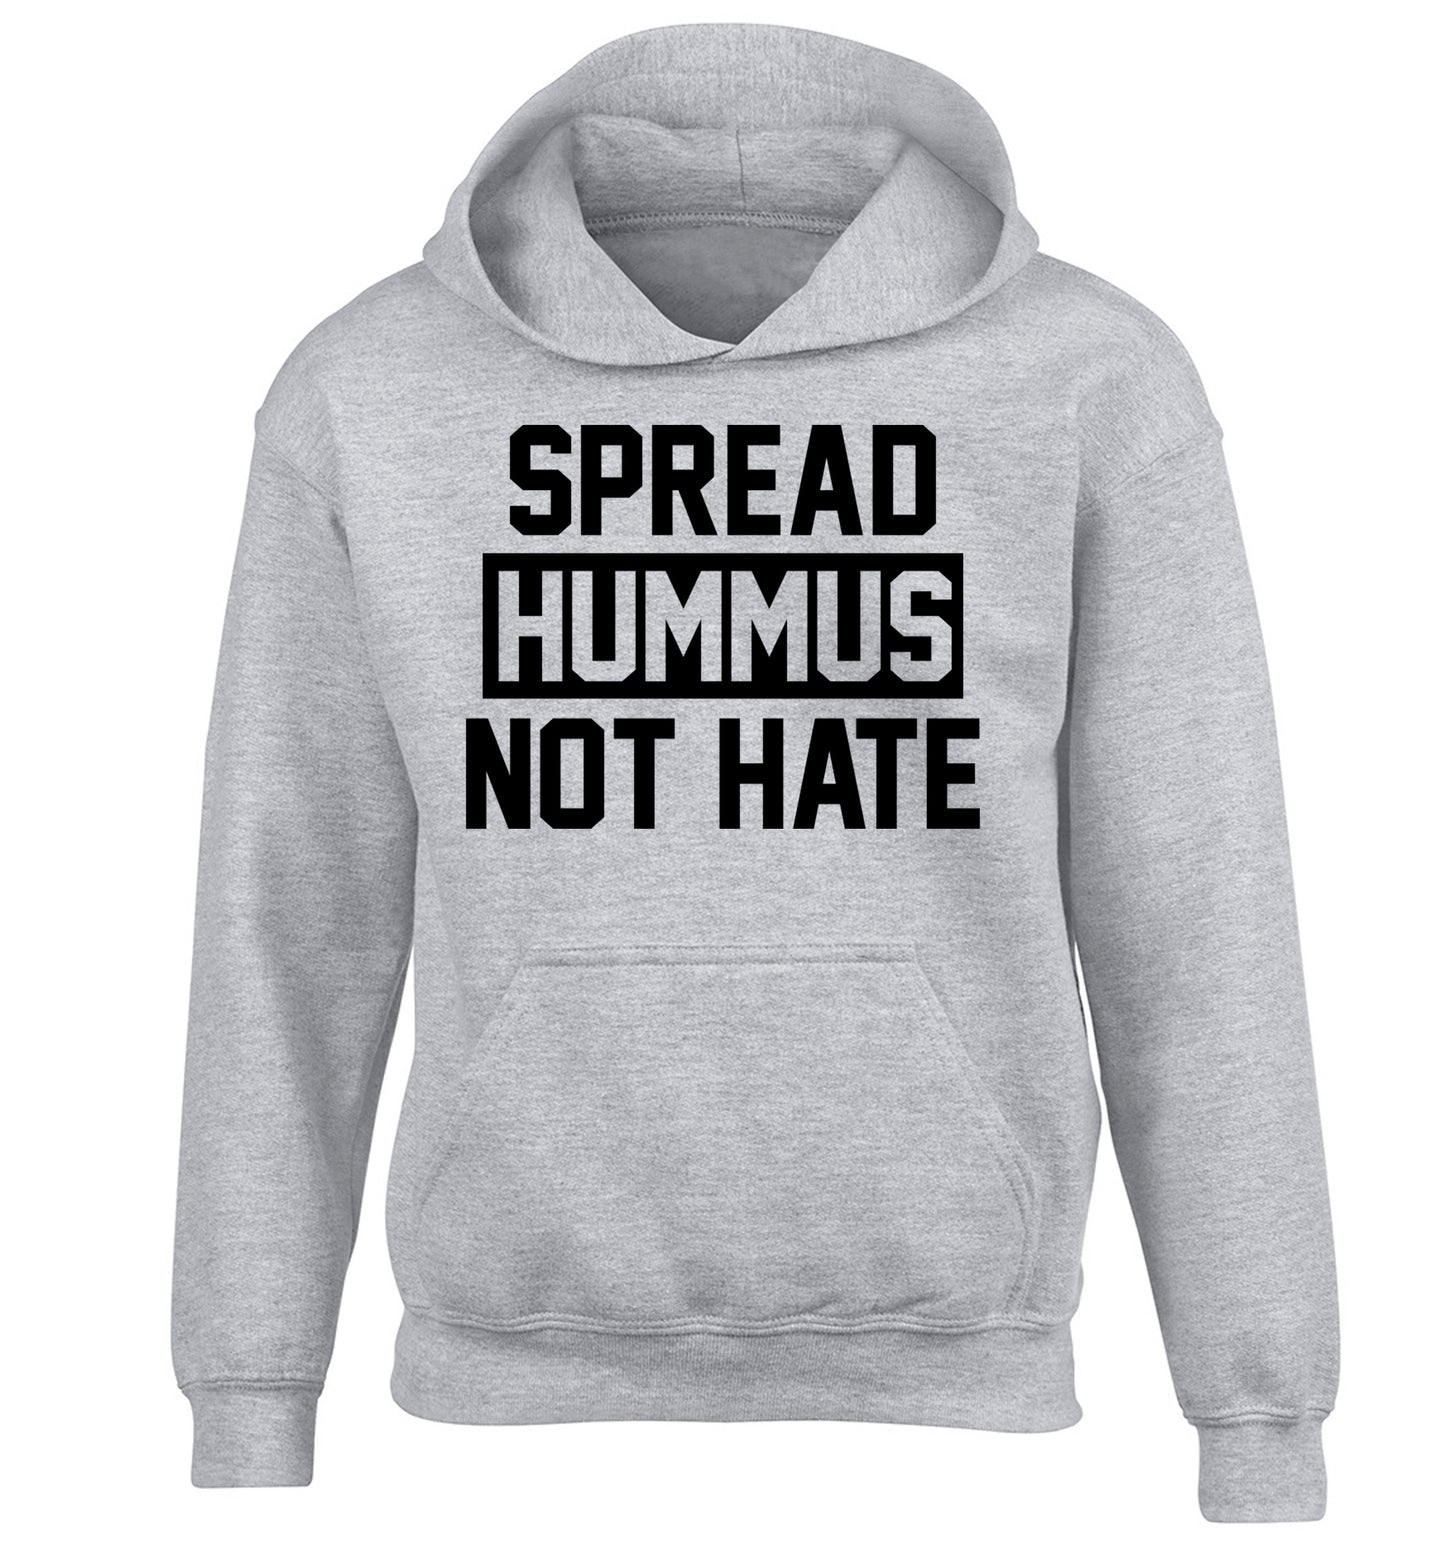 Spread hummus not hate children's grey hoodie 12-14 Years